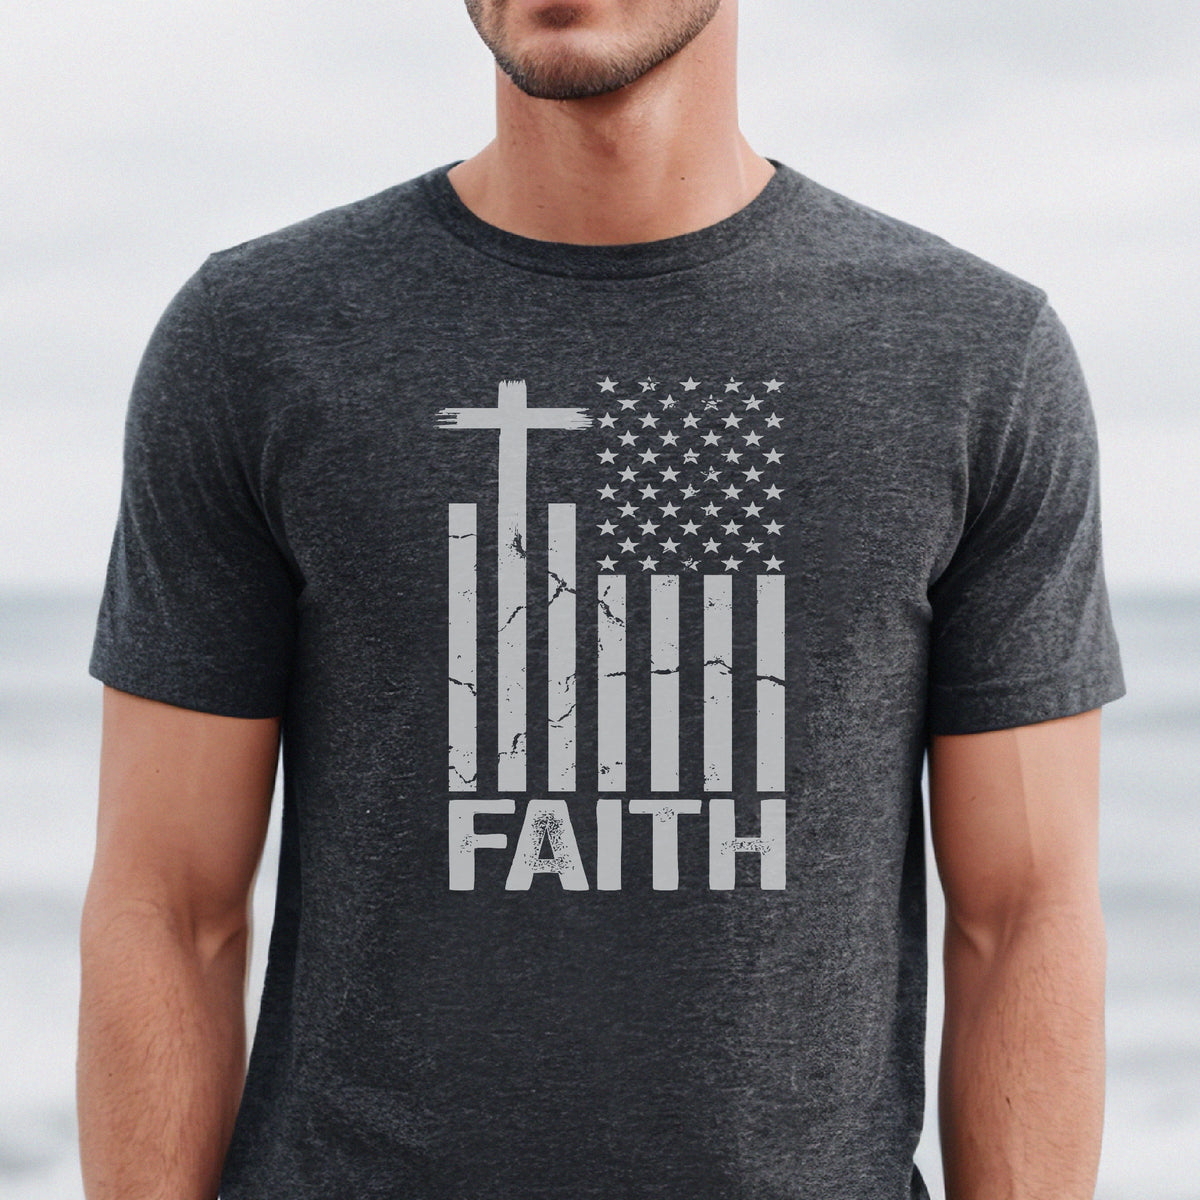 Christian Faith t-shirts for men.